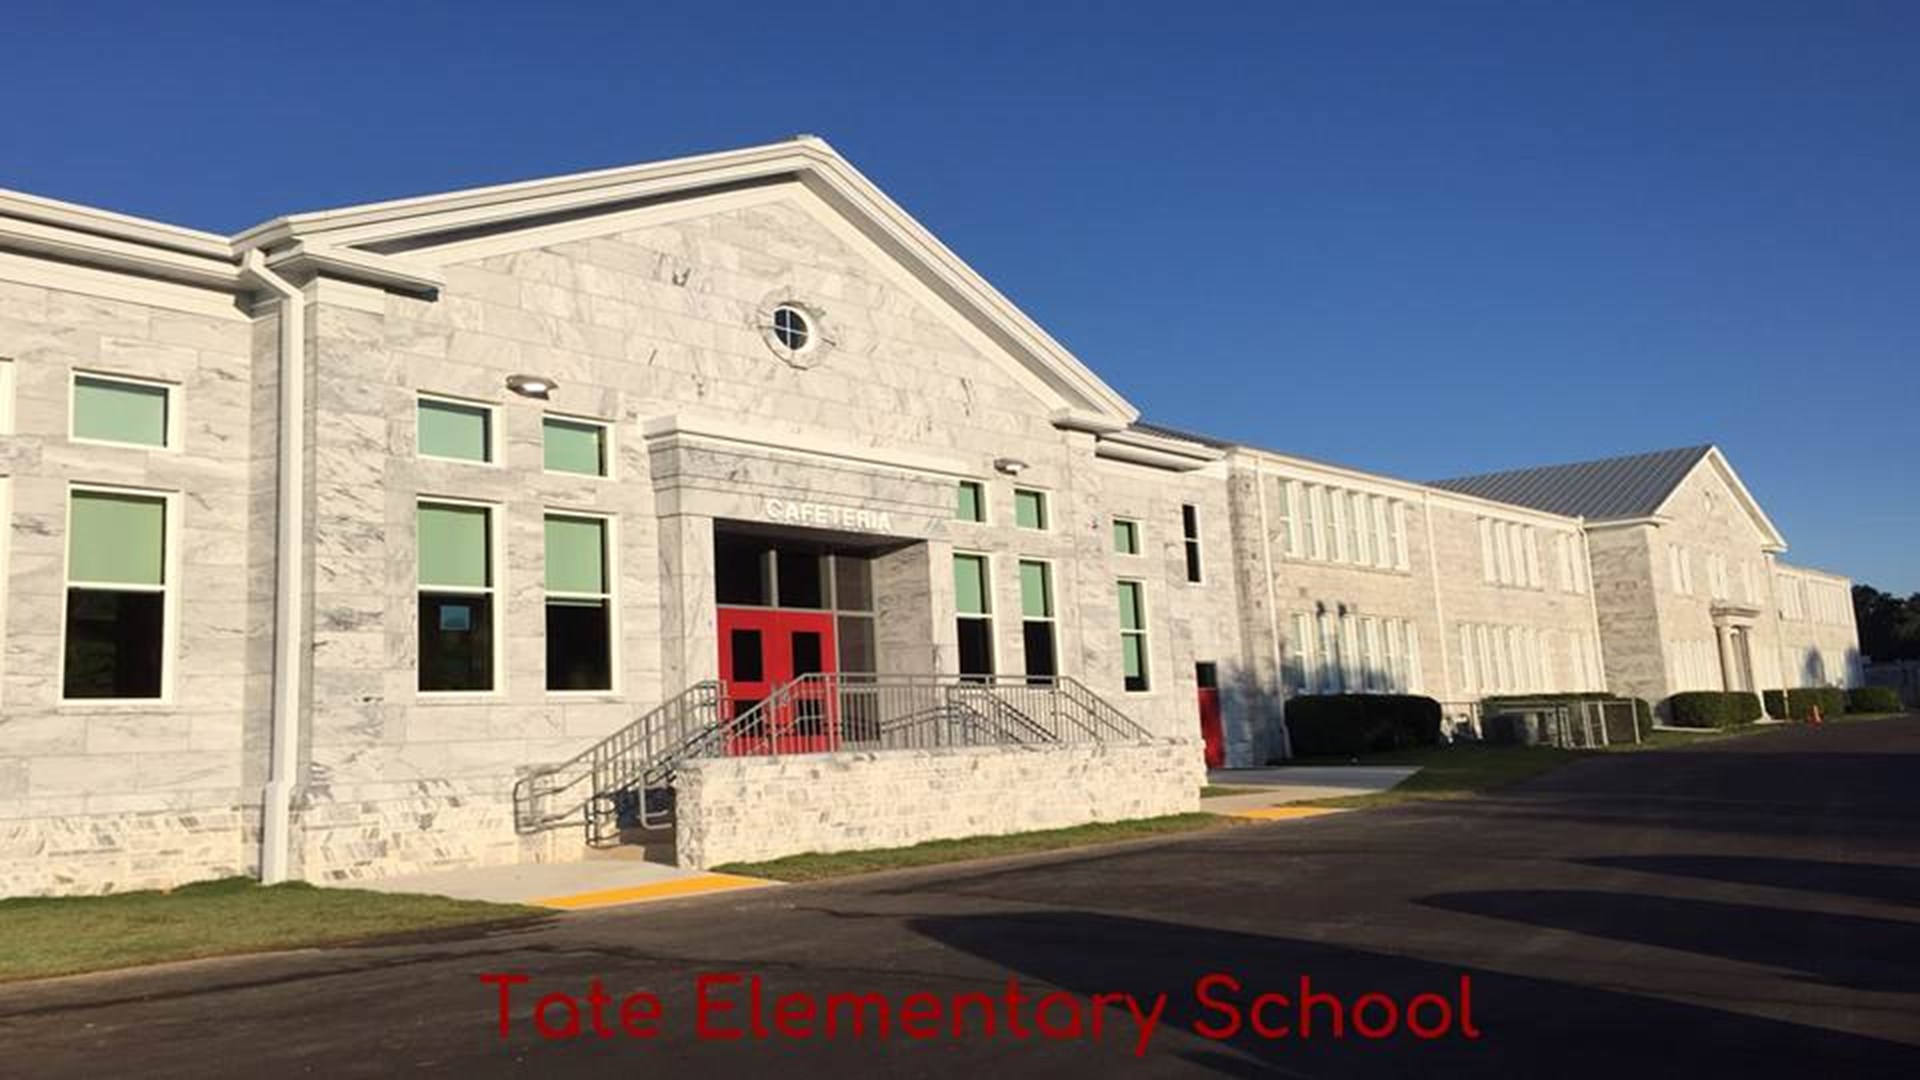 Tate Elementary School 